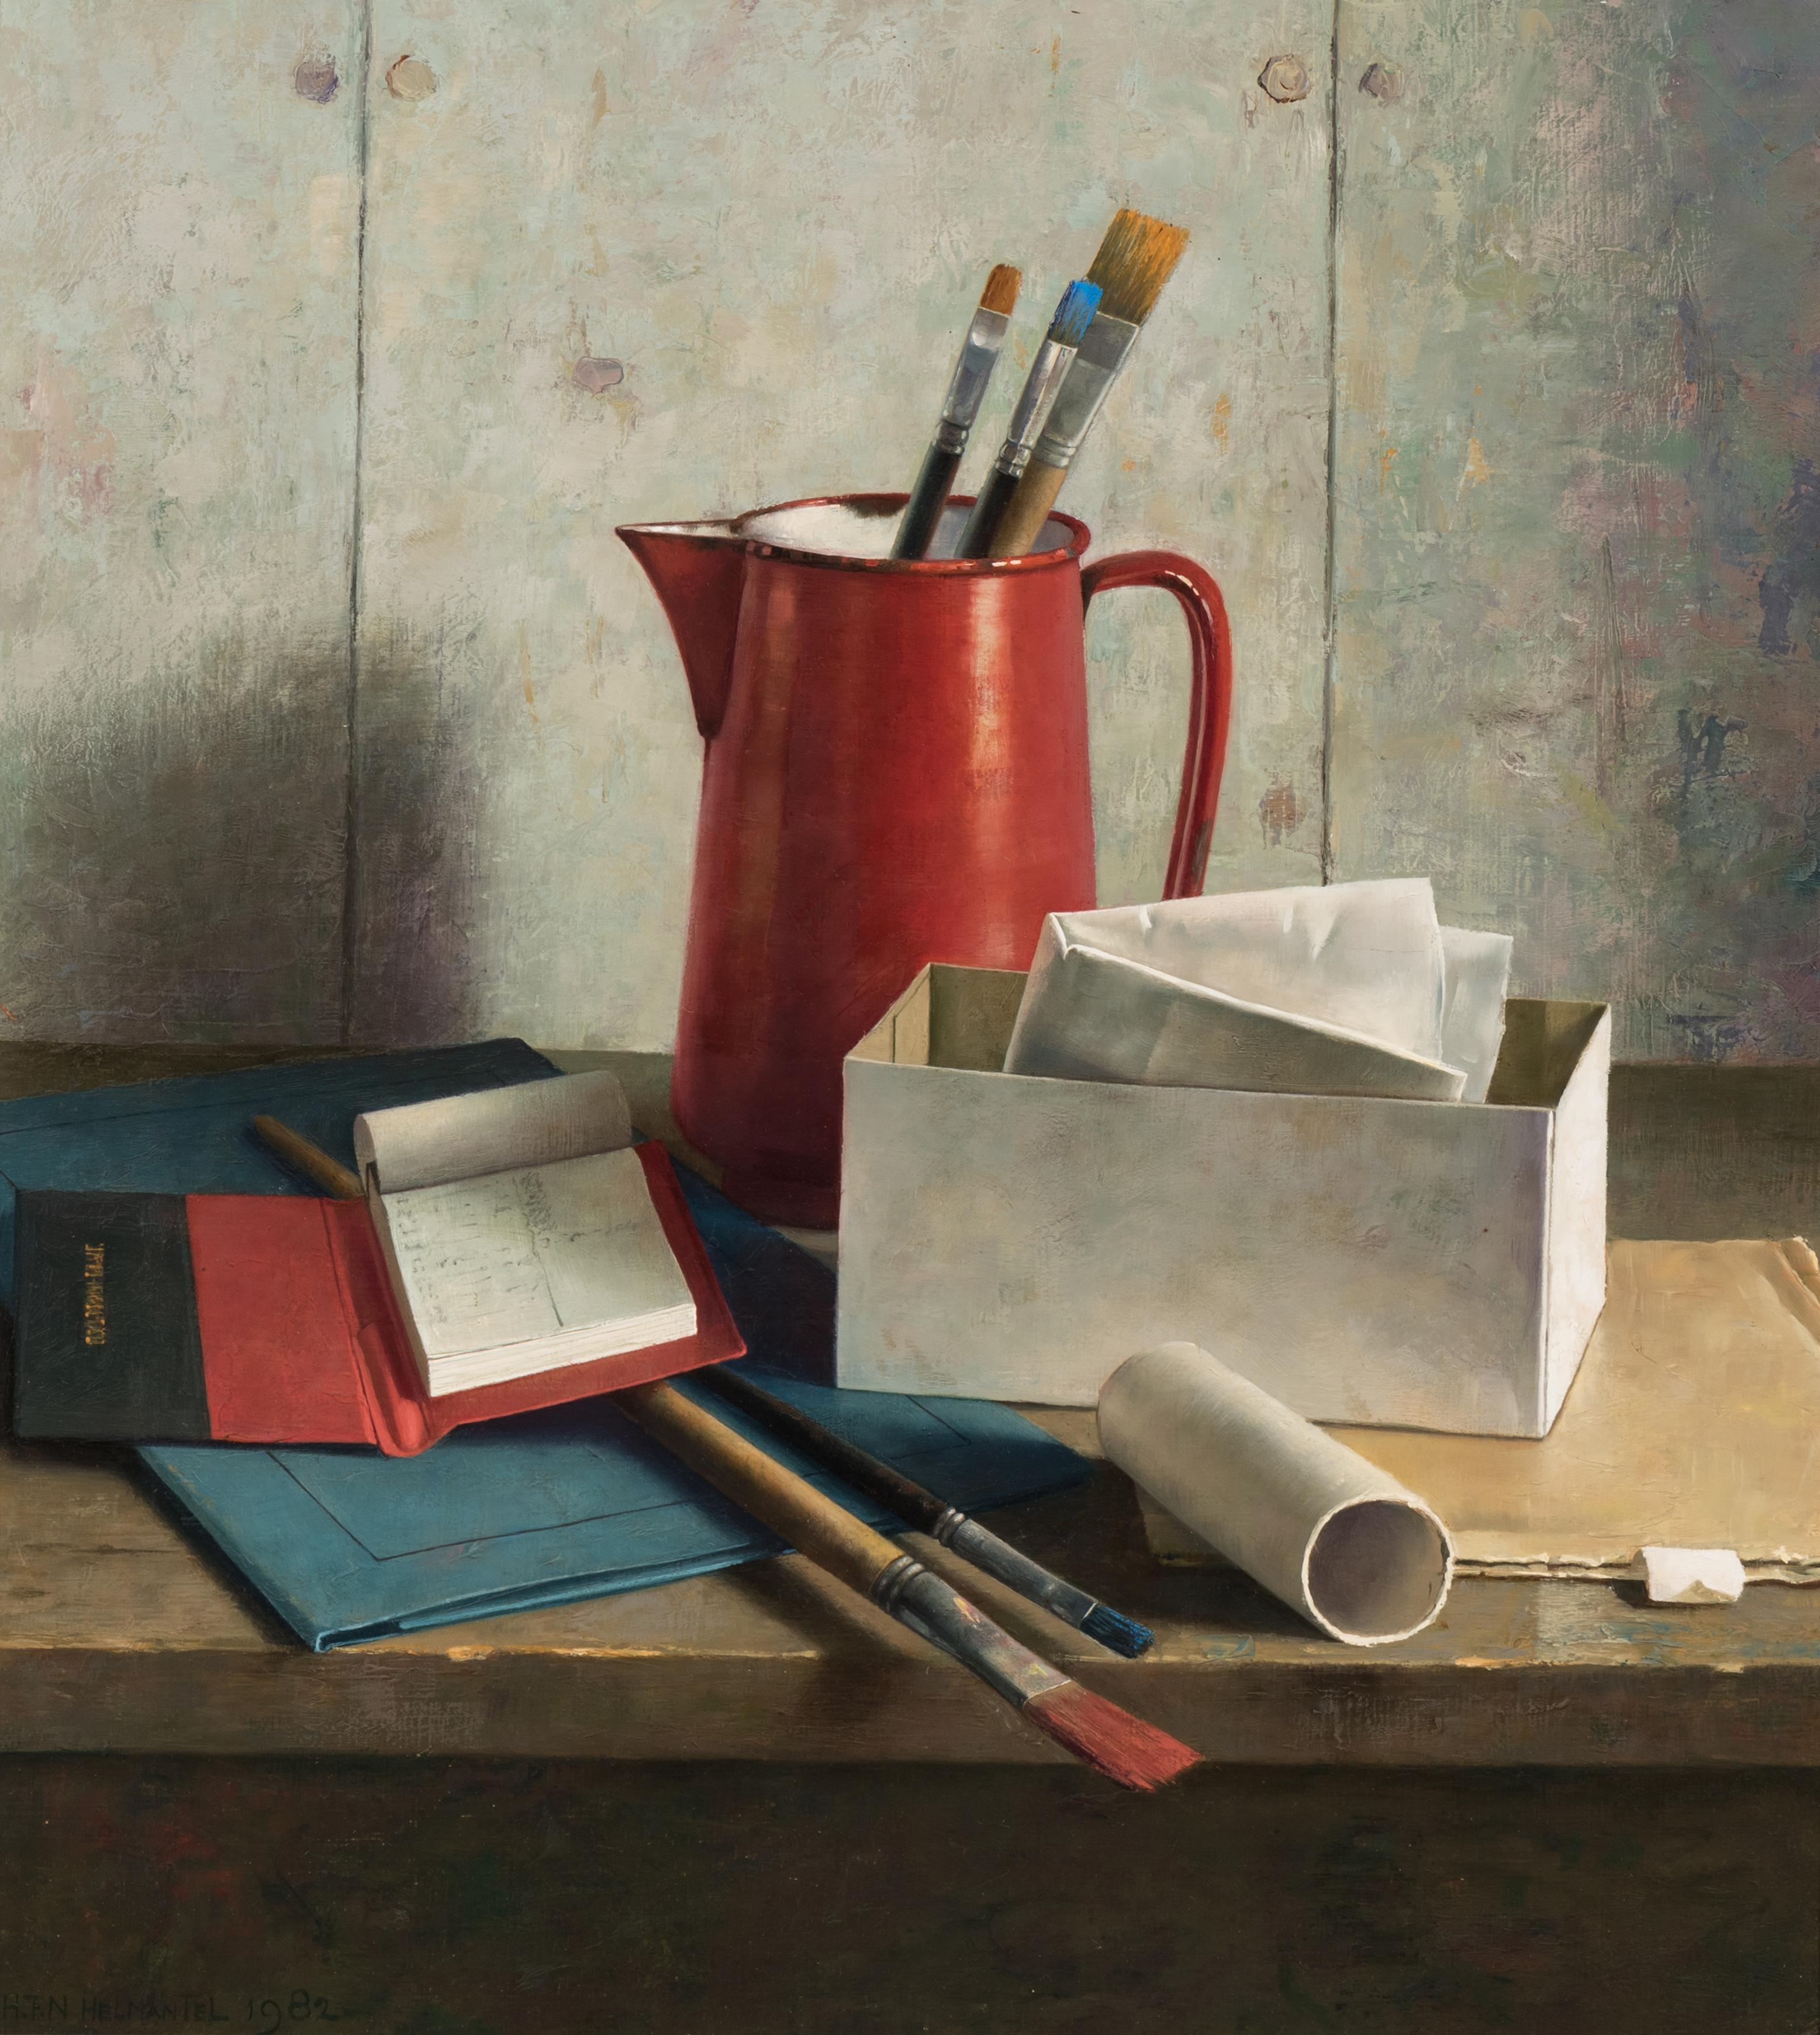 Stilleven met rode kan en penselen [Still life with red jug and brushes] by Henk Helmantel, 1982